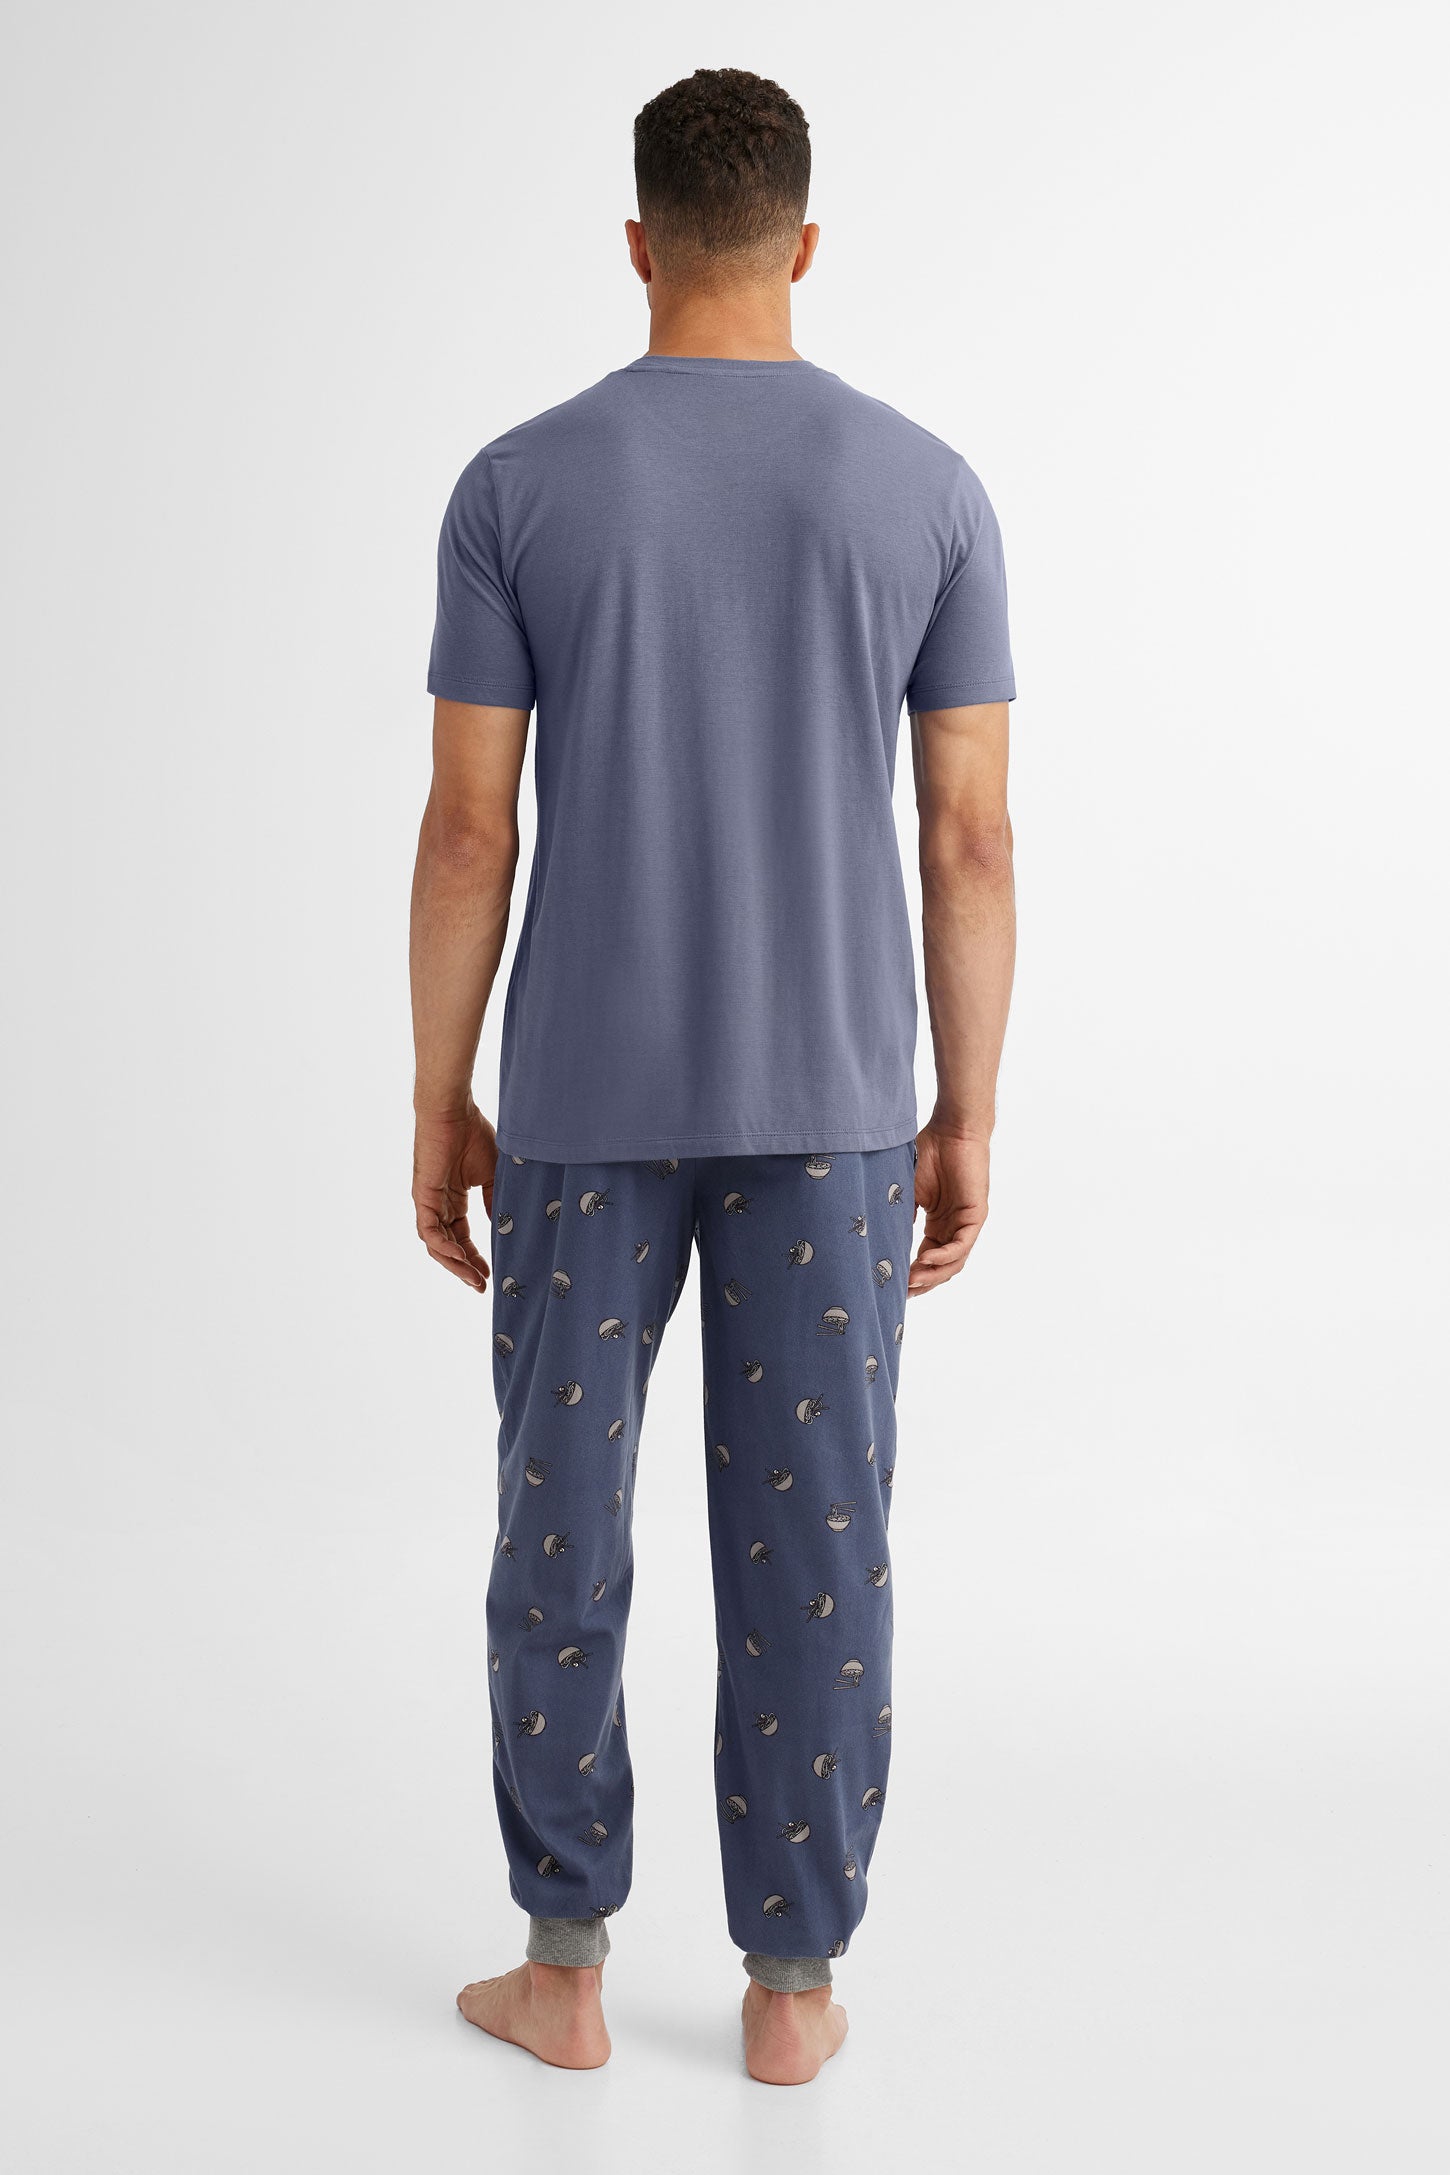 Duos futés, T-shirt pyjama imprimé, 2/40$ - Homme && MARIN